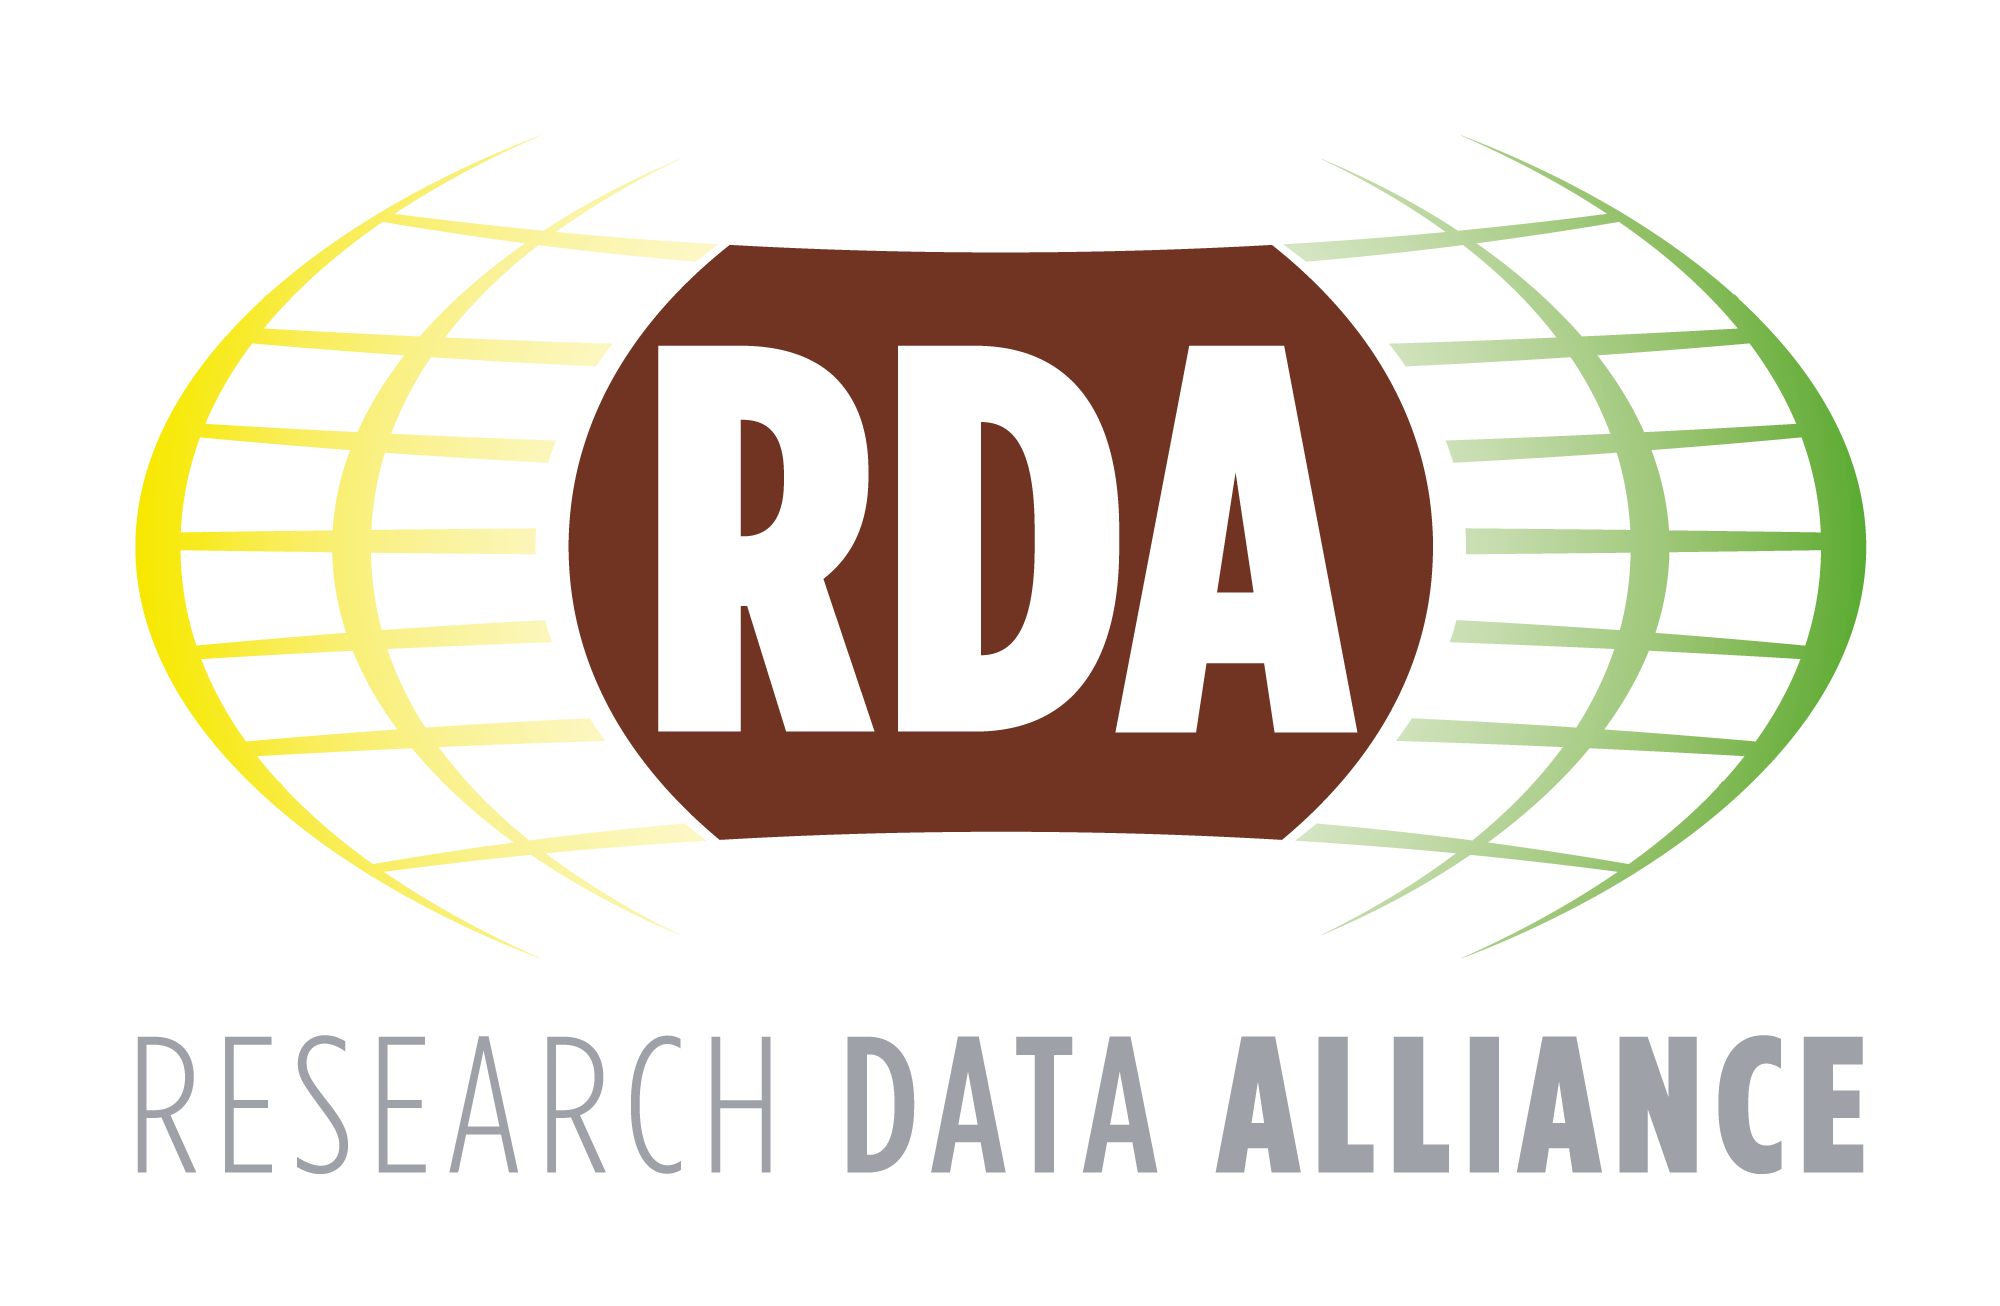 Research Data Alliance logo